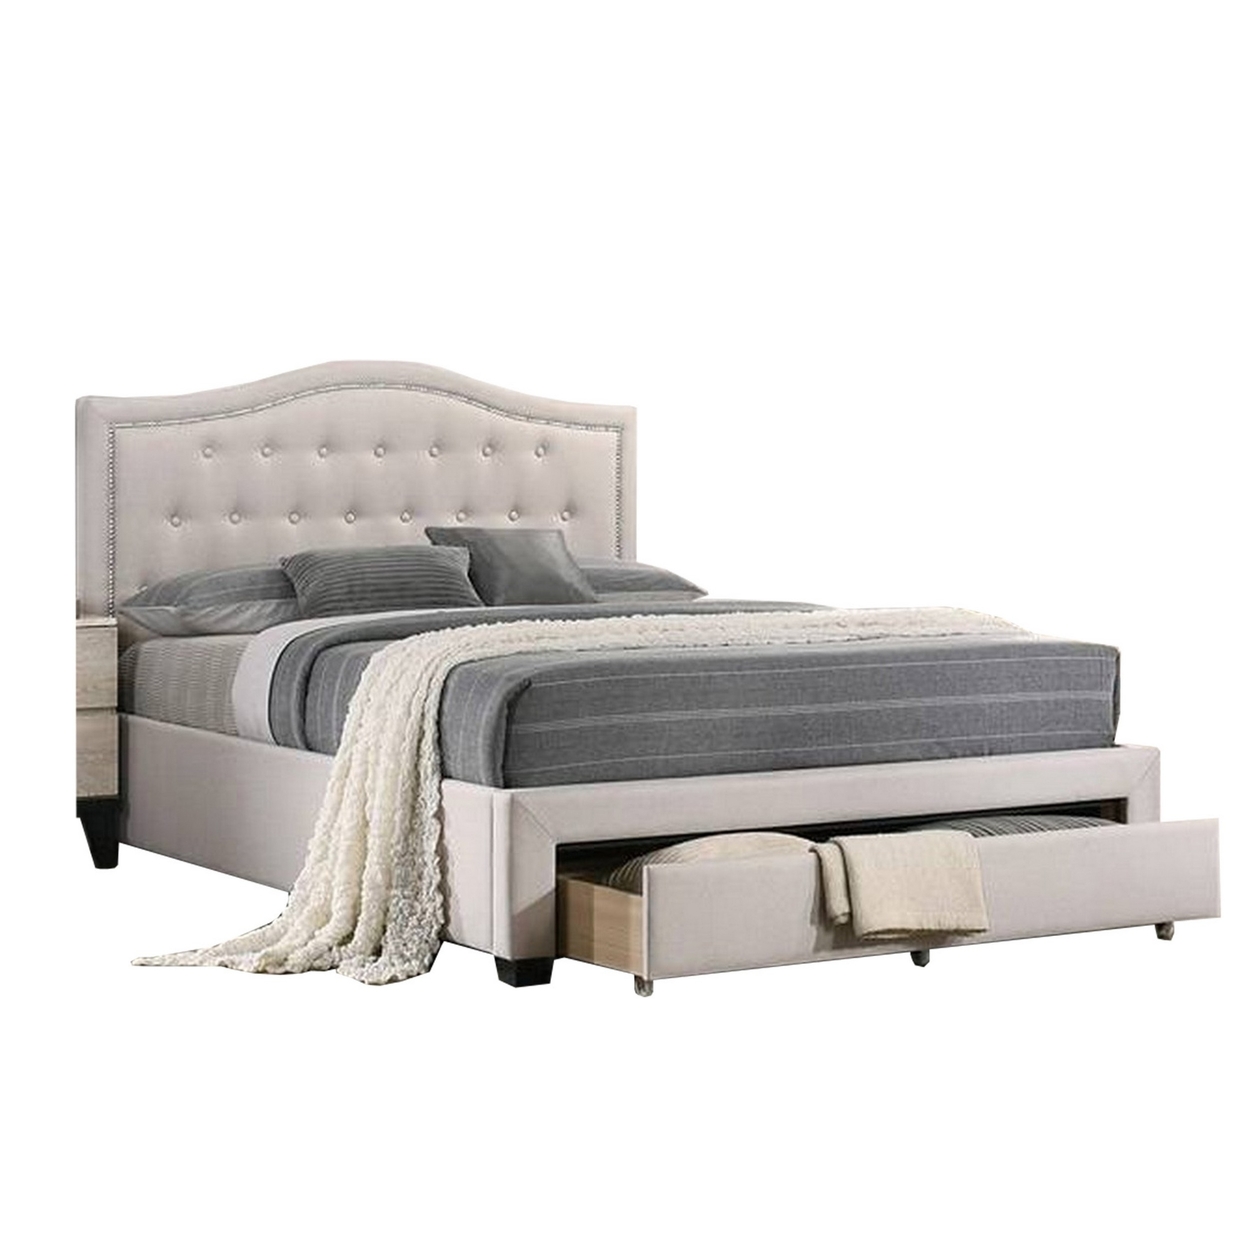 Buk Upholstered Tufted Twin Bed With Storage, Nailhead Trim, Ivory Burlap - Saltoro Sherpi